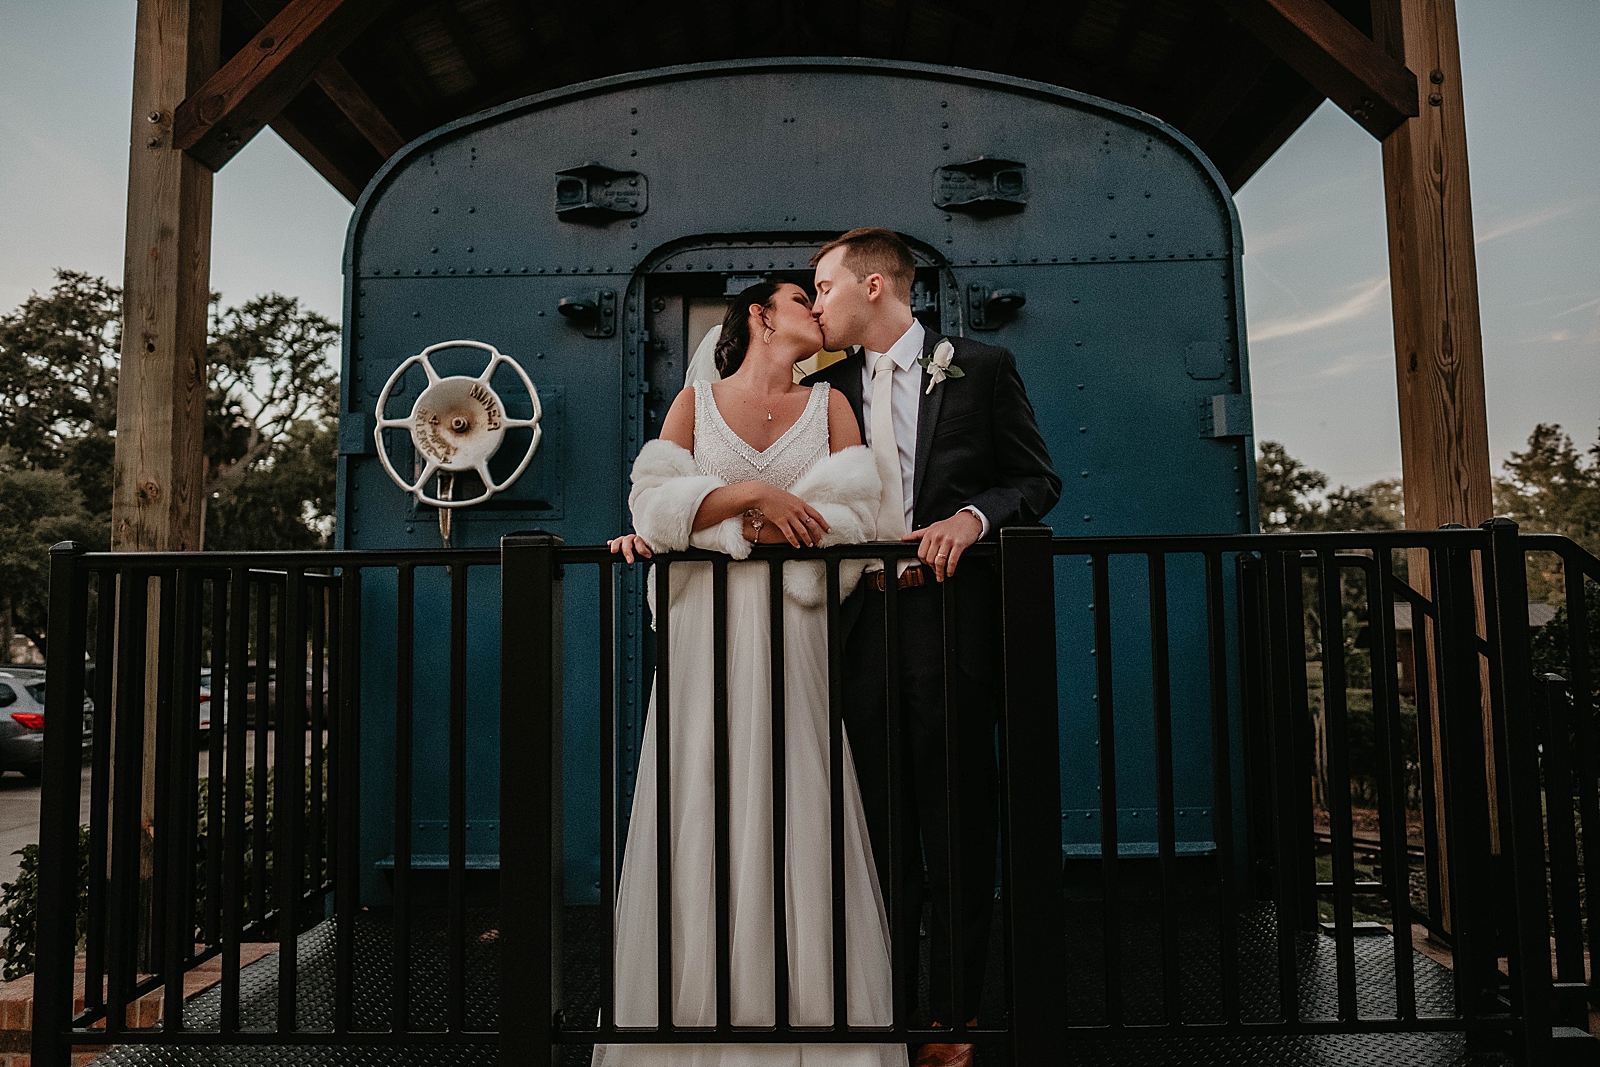 Romantic South Florida Wedding Photos by Palm Beach Wedding Photographer, Krystal Capone Photography